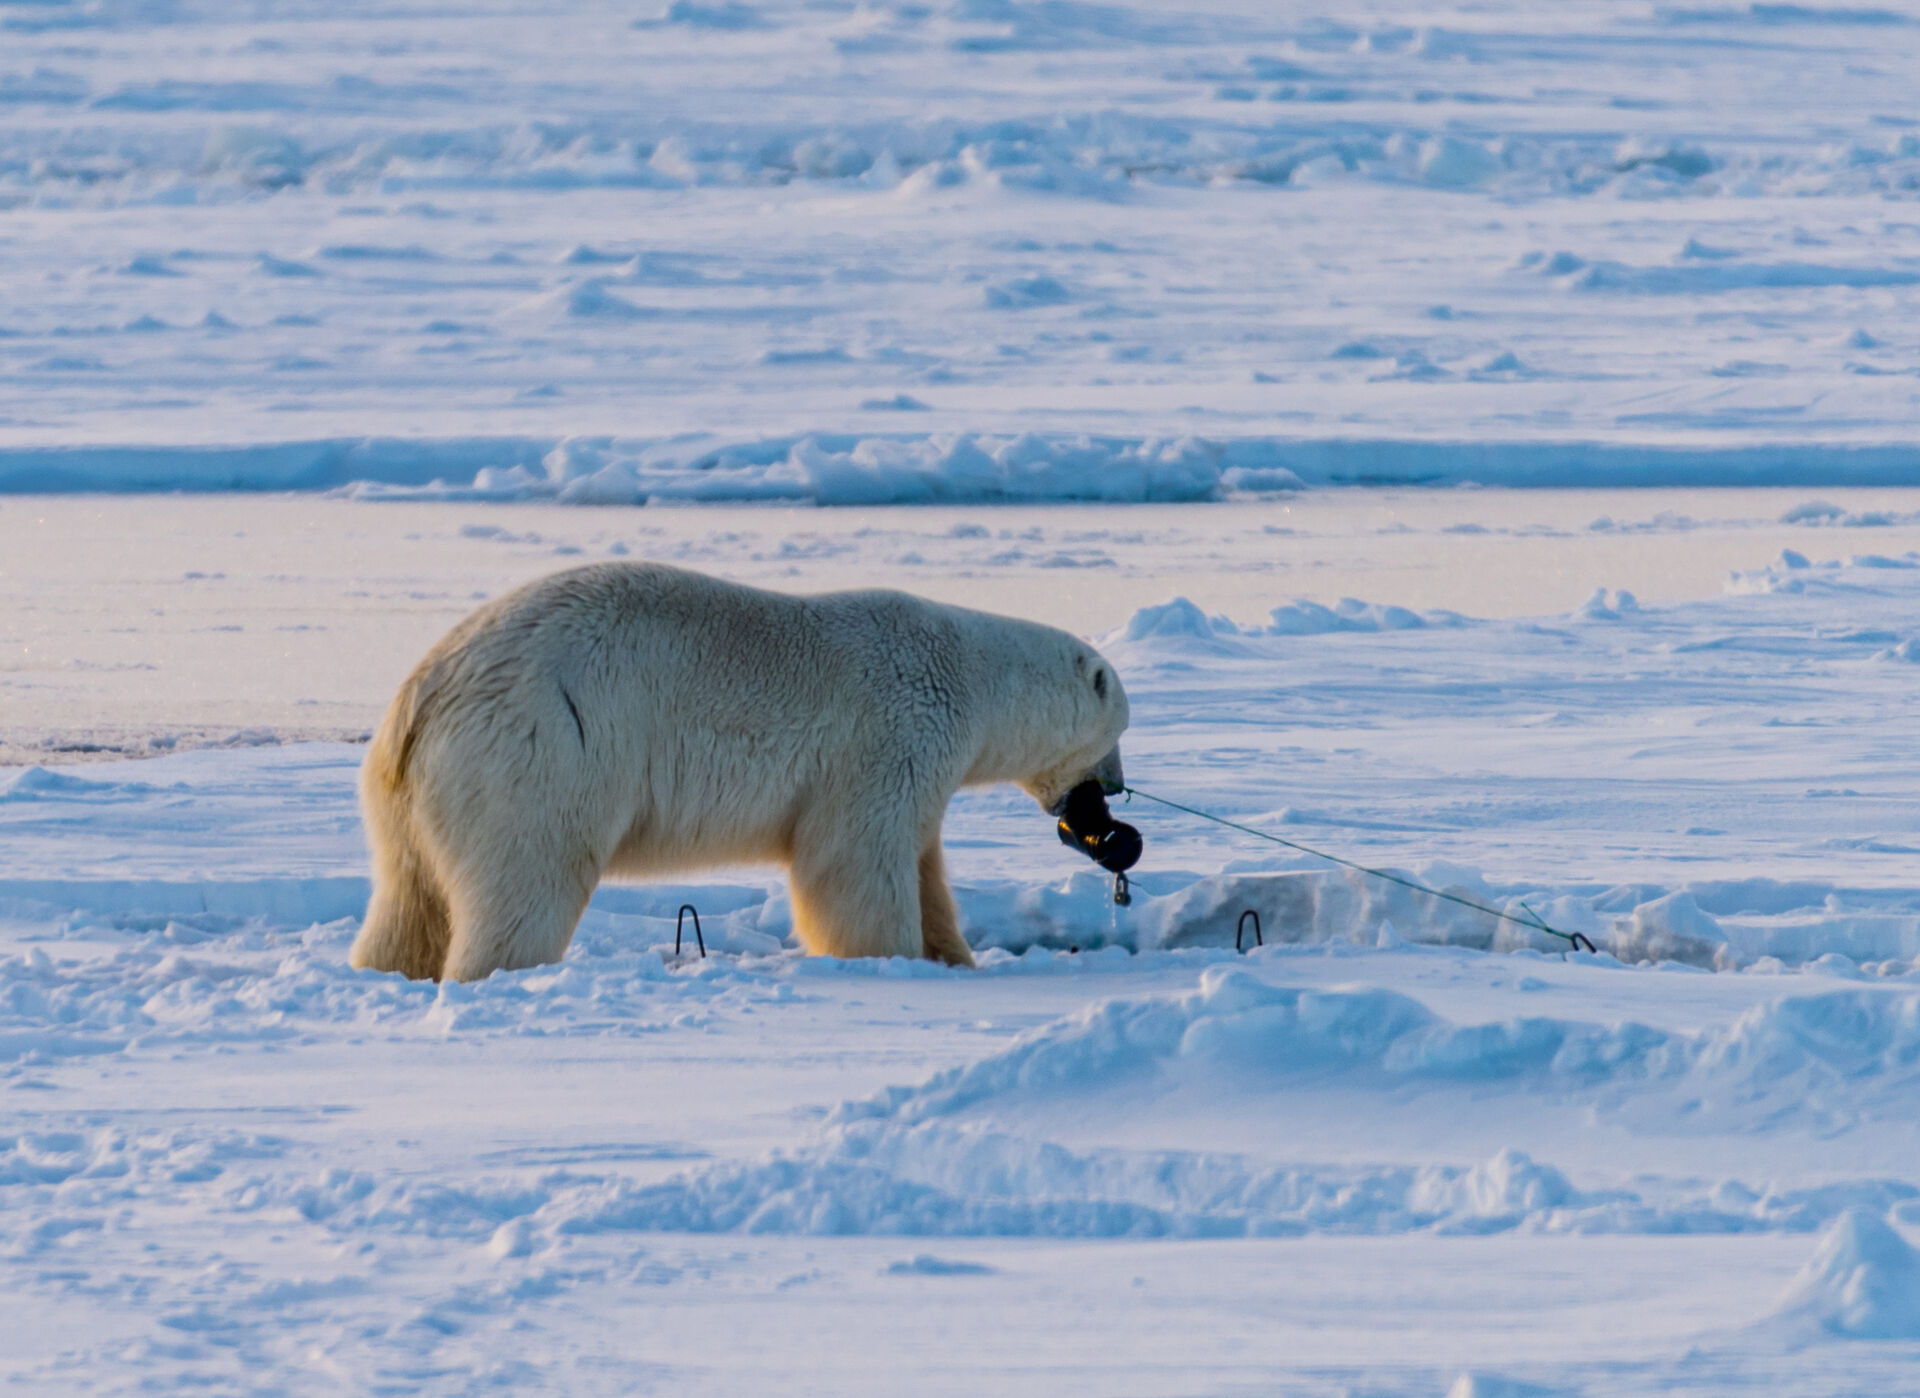 Image may contain: Snow, Polar bear, Carnivore, Polar ice cap, Natural landscape.